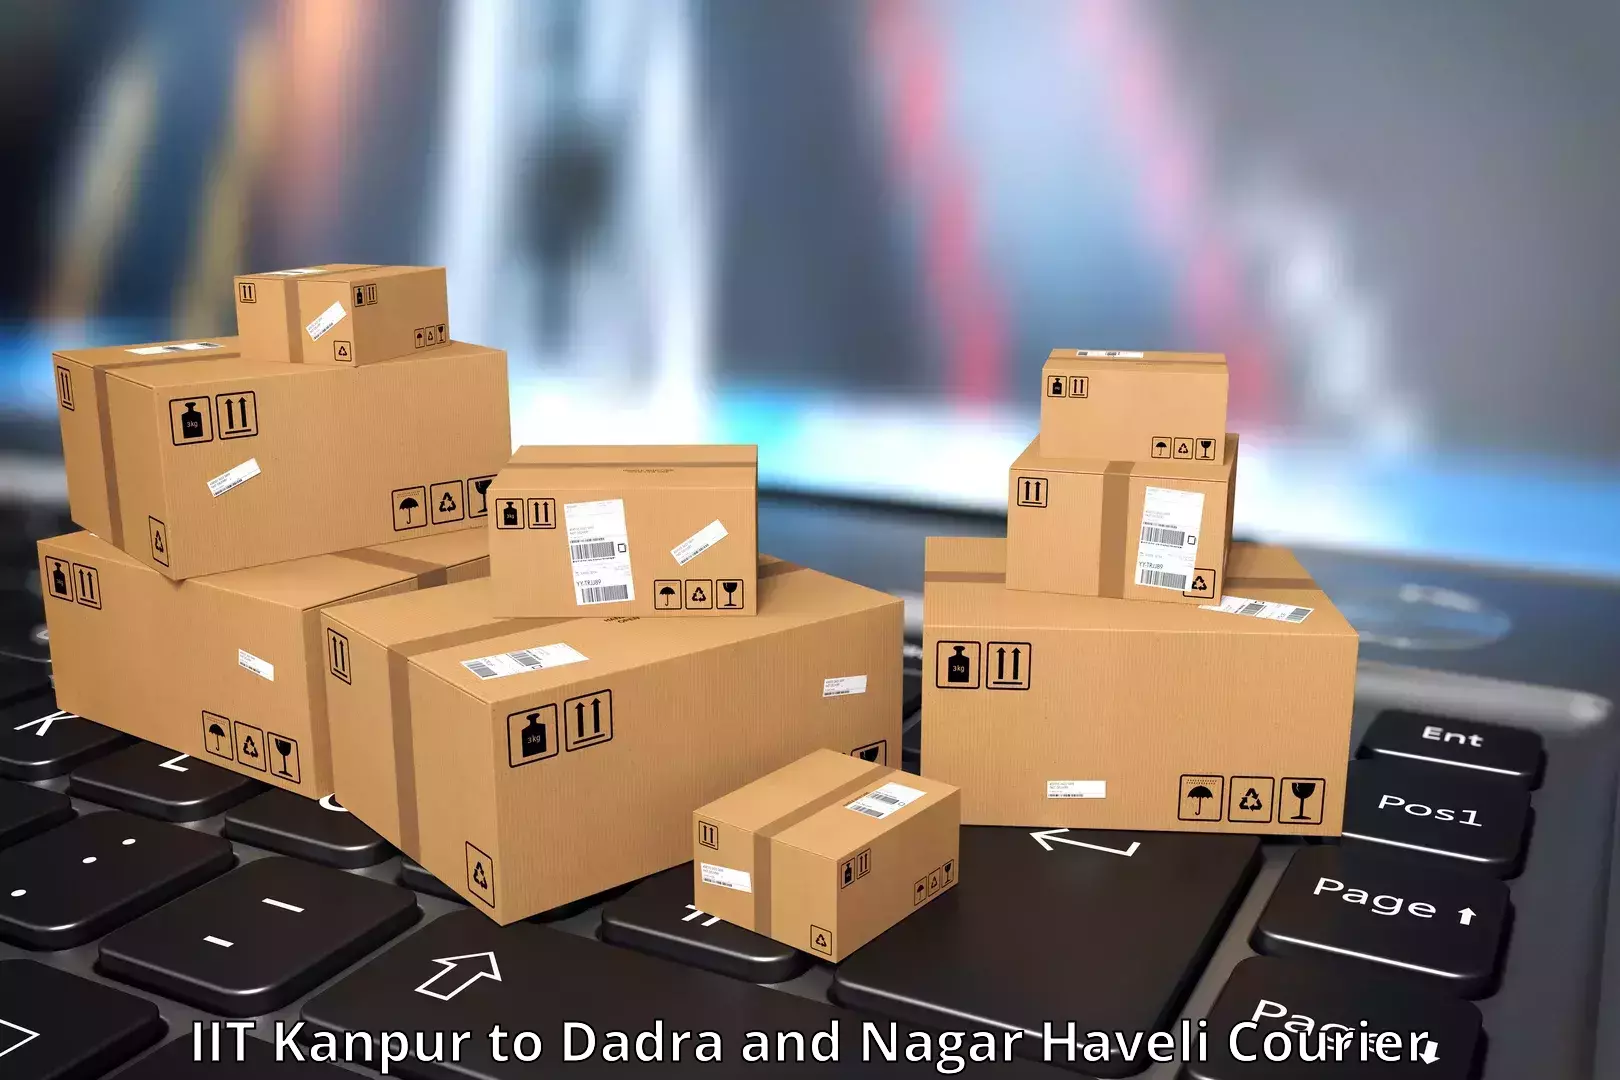 Full-service courier options IIT Kanpur to Silvassa